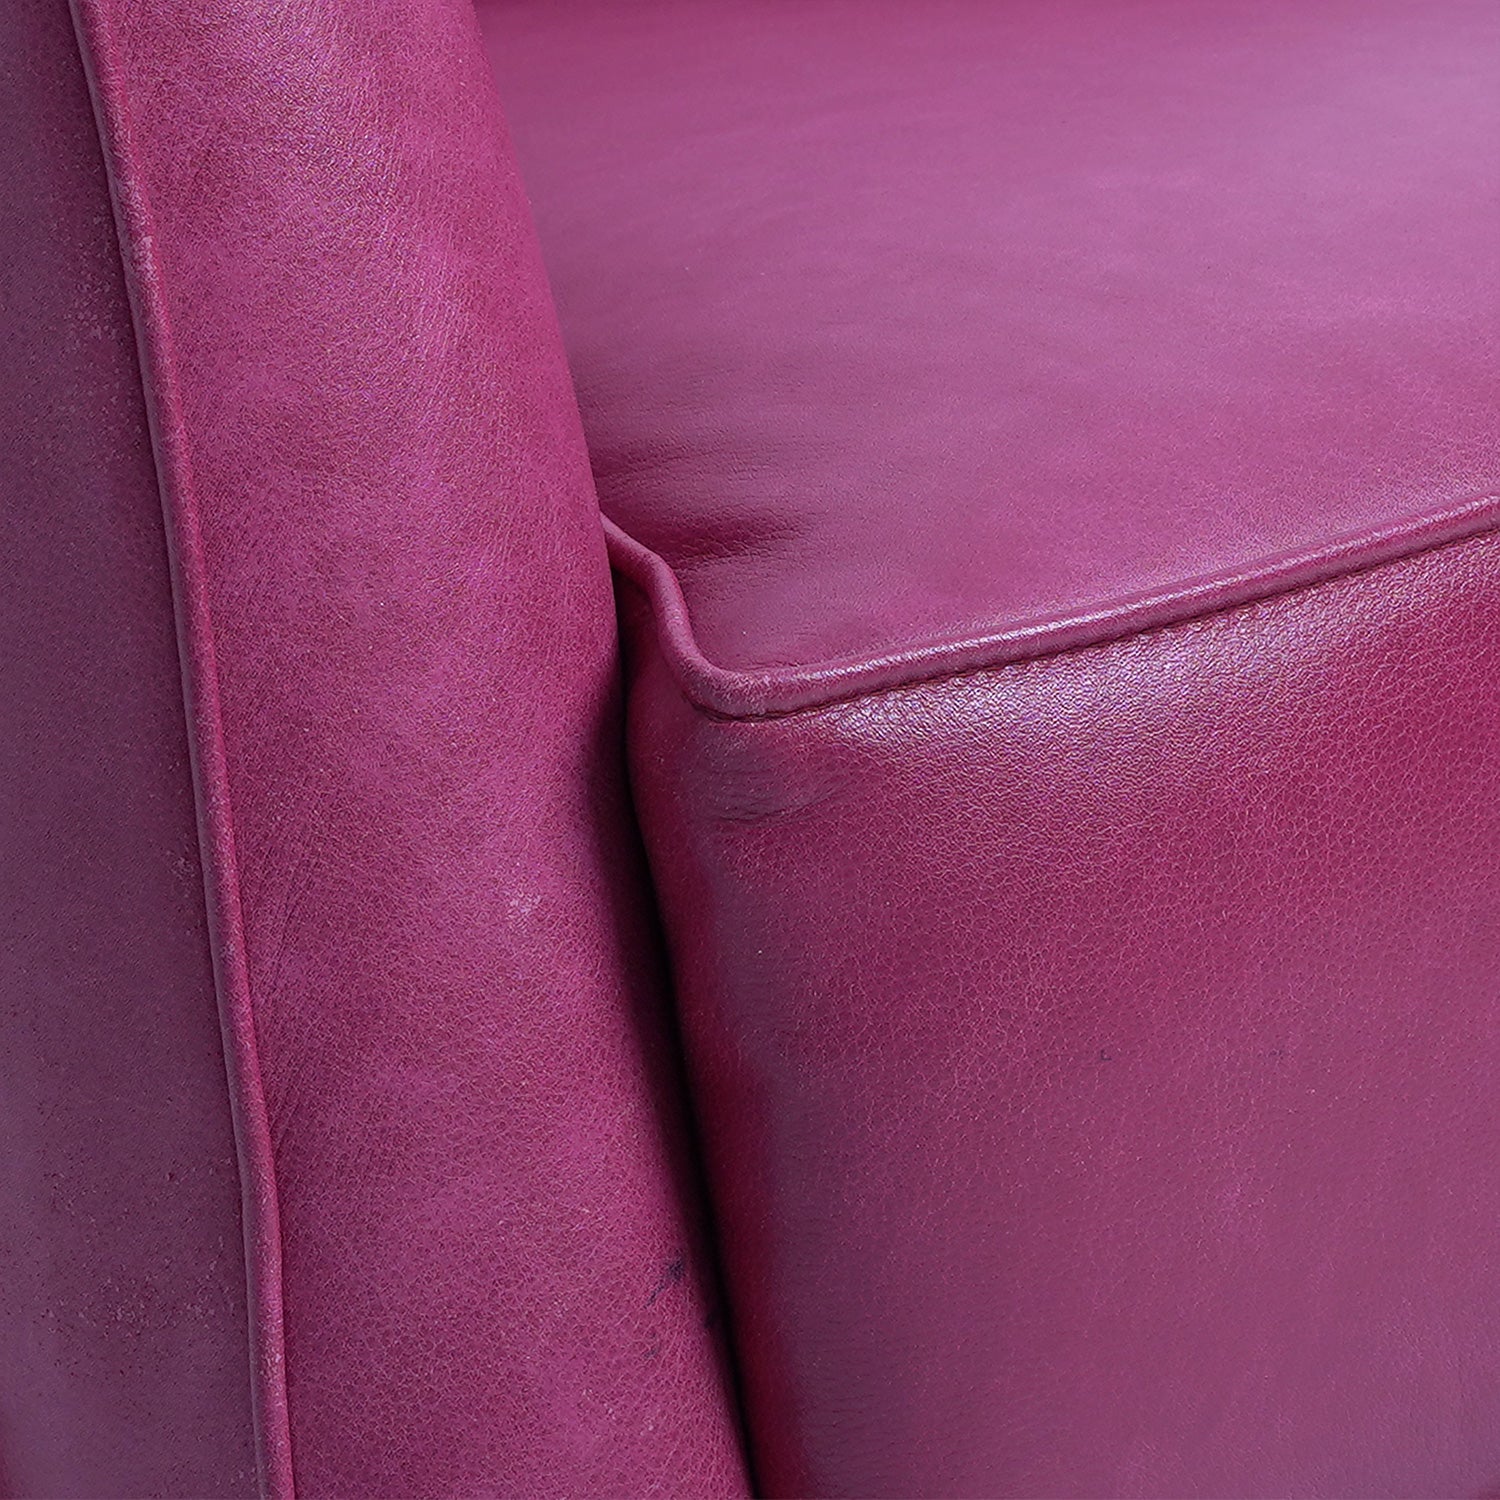 Byrne Ara Antigo Leather Chair Garnet Close Up Seat Cushion